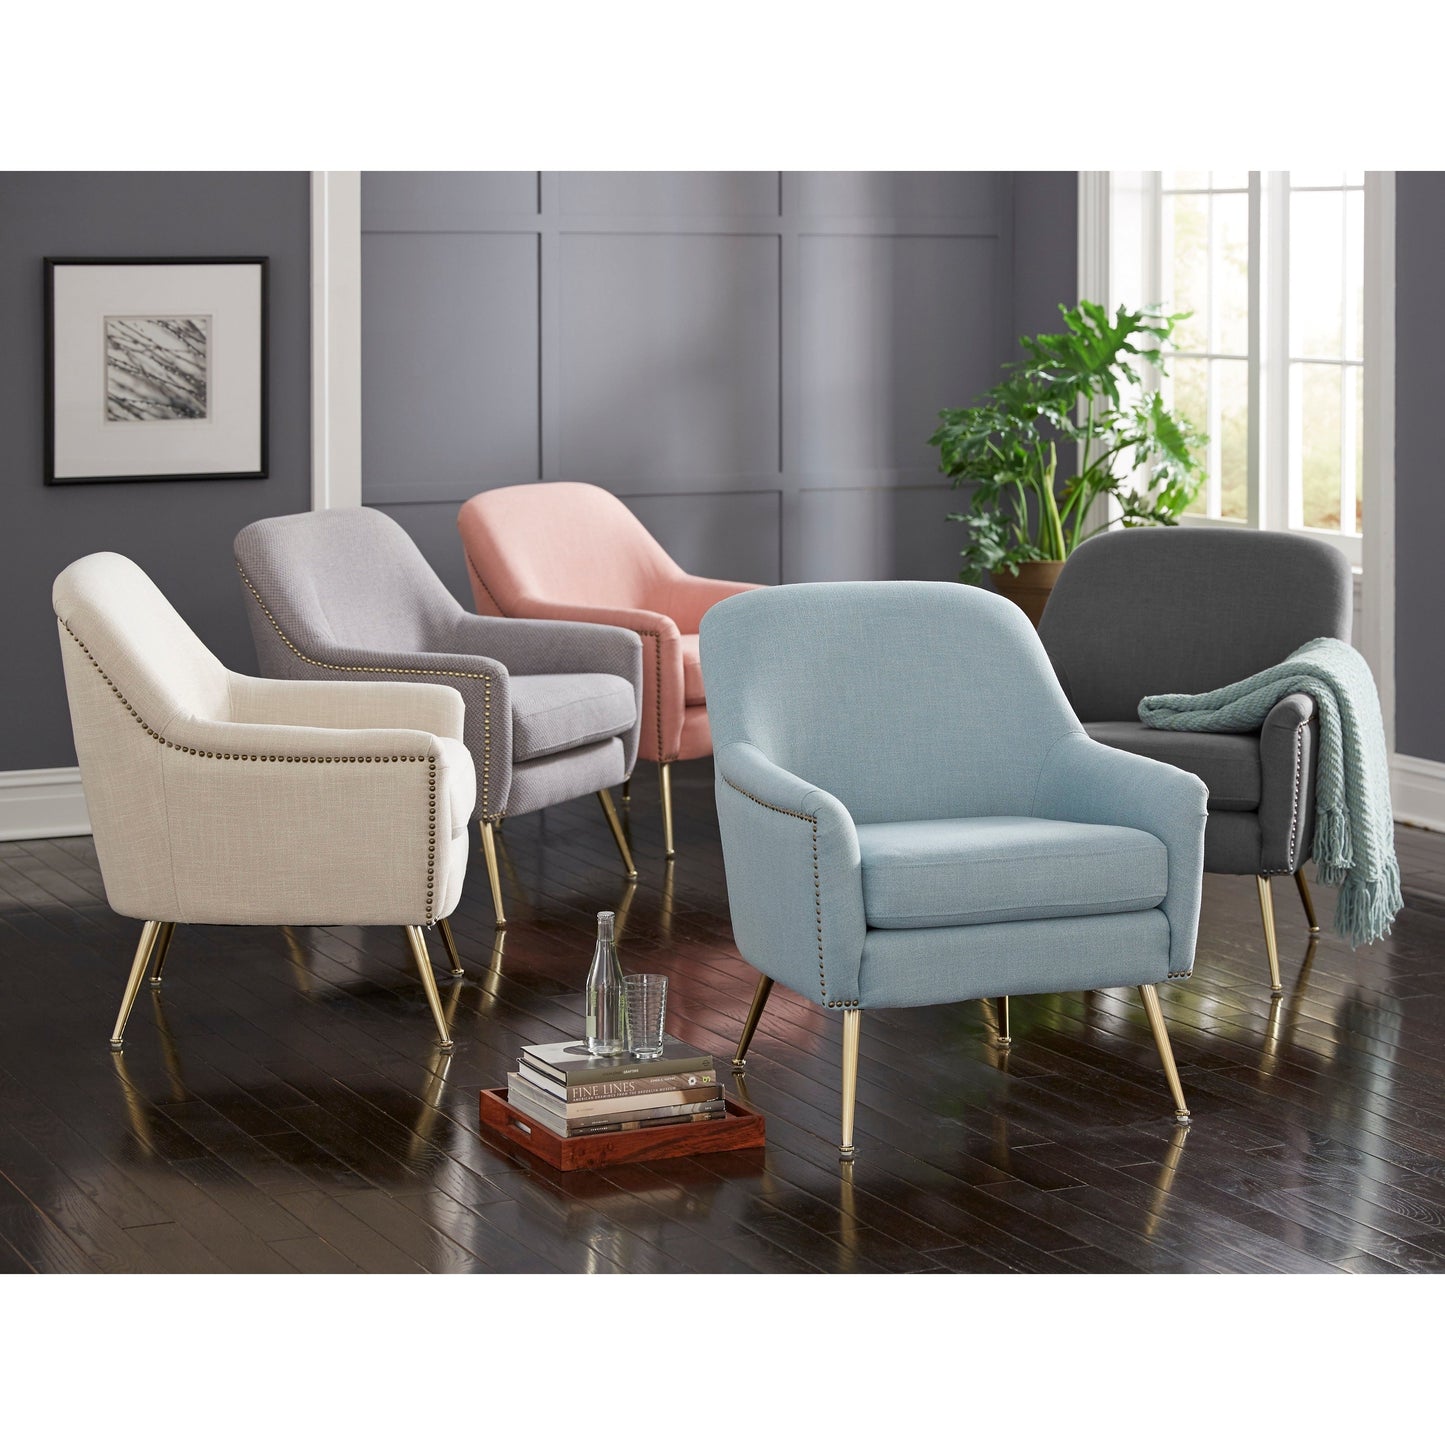 Upholstered Chair - Vita in green